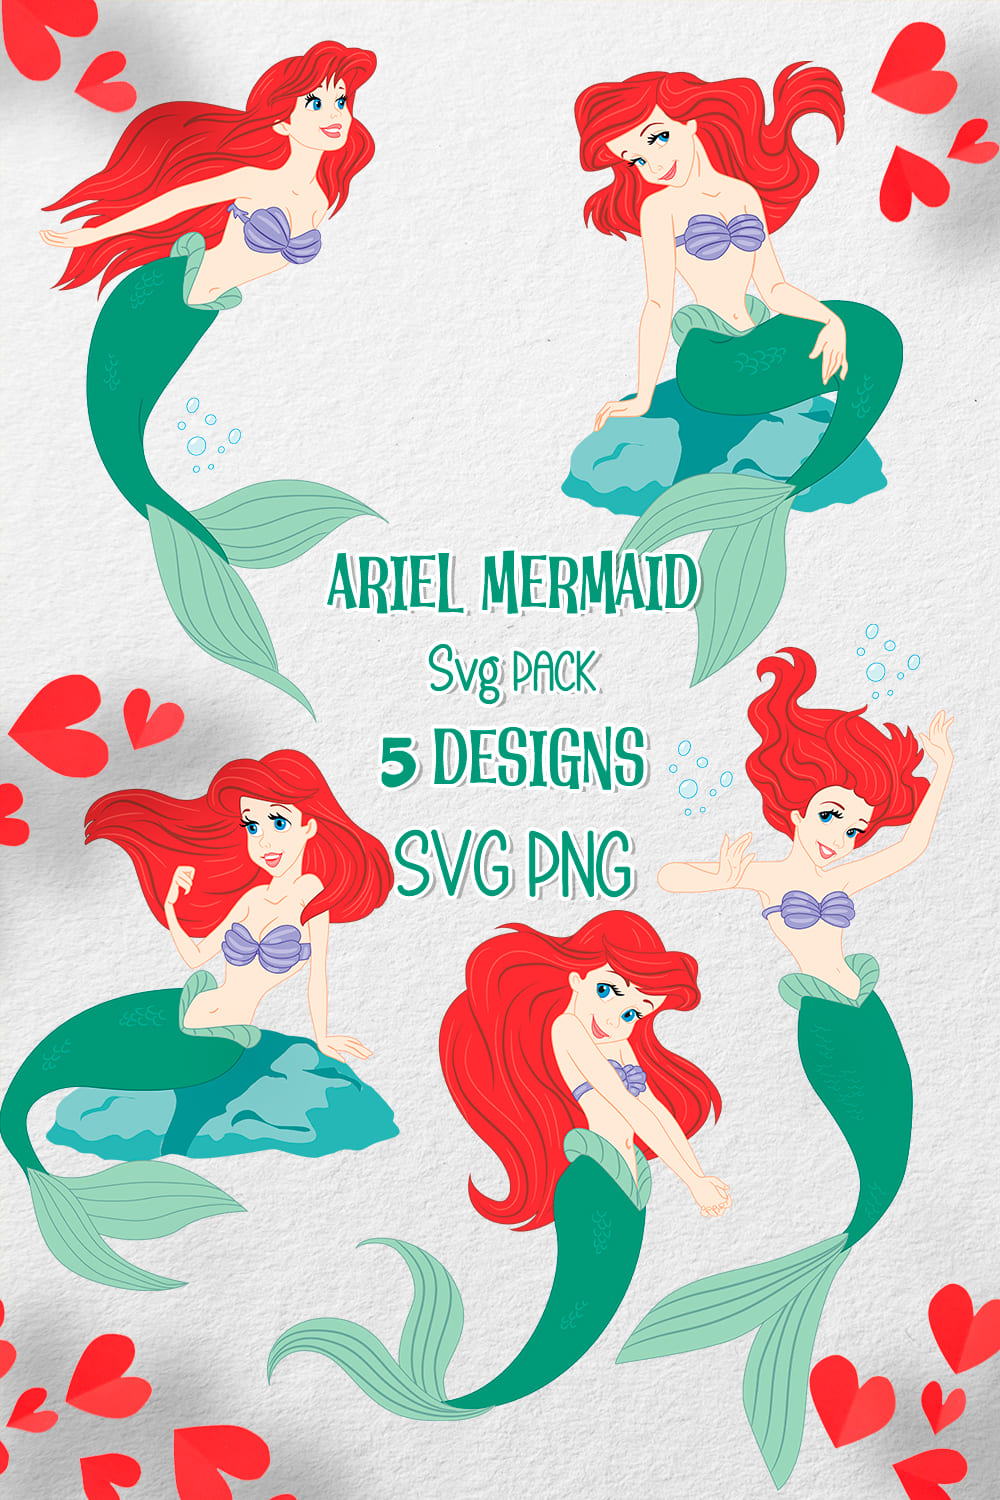 Ariel Mermaid Svg - Pinterest.